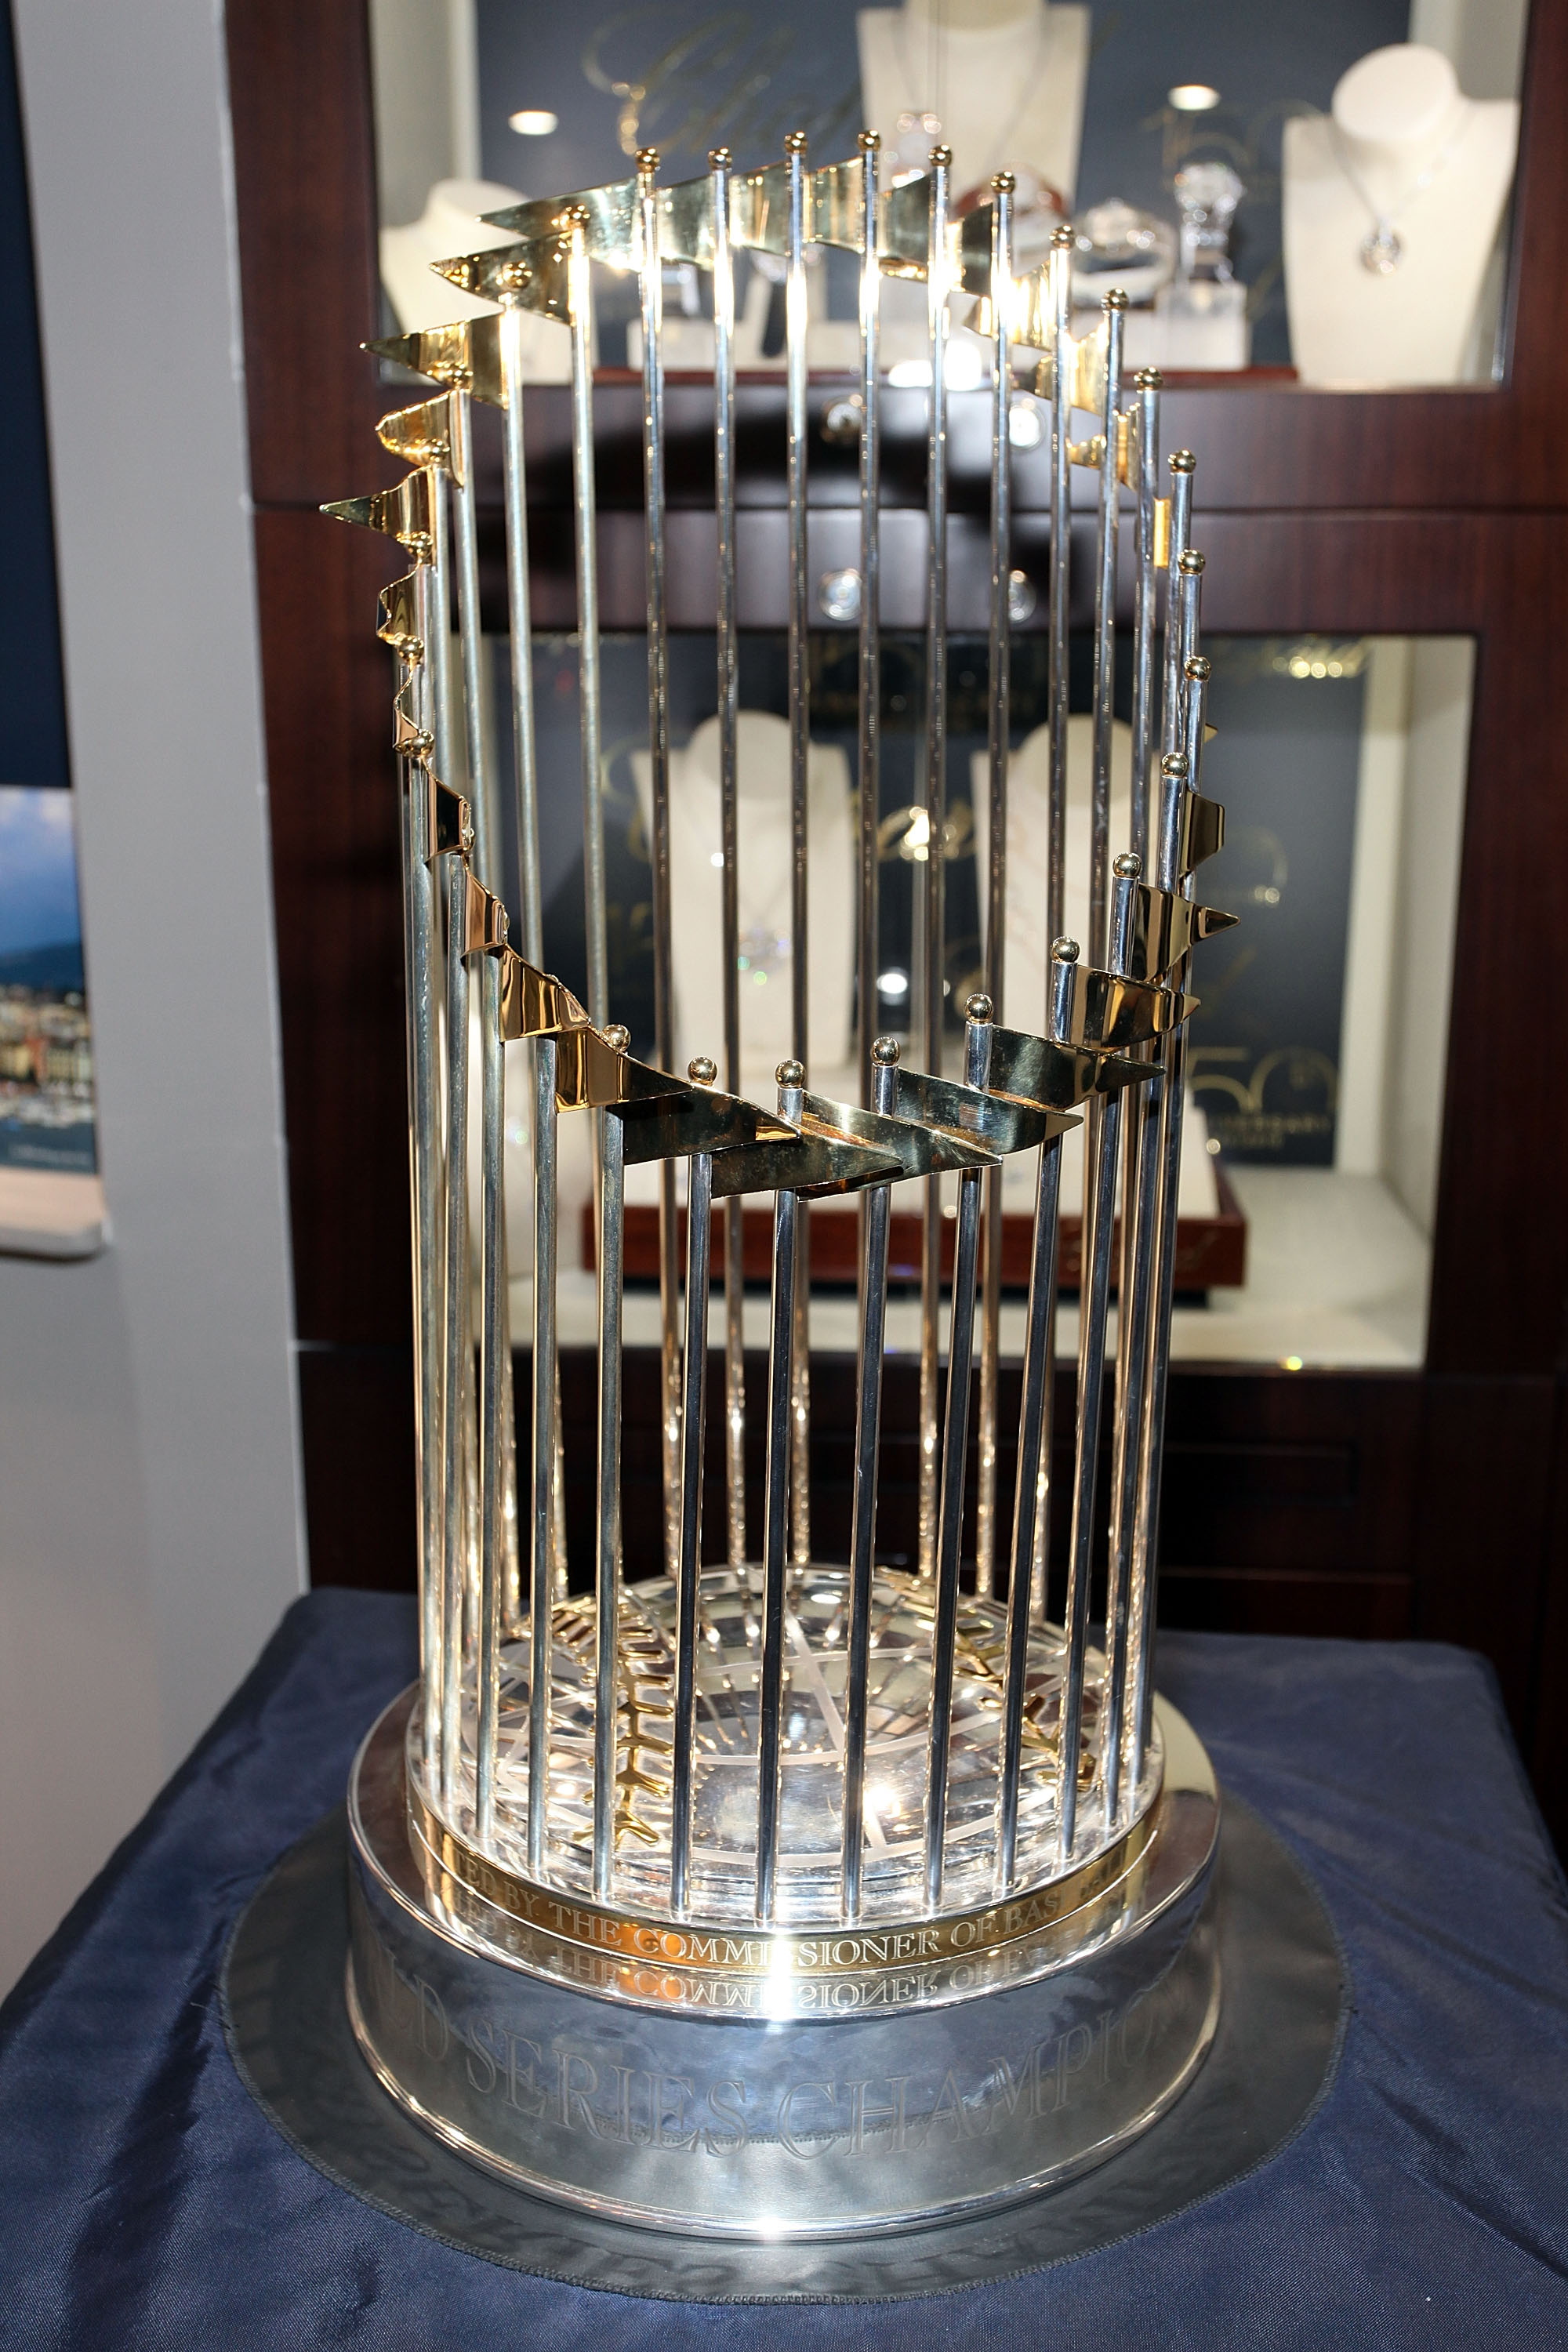 2009 World Series Trophy inside the Yankee Stadium Museum.